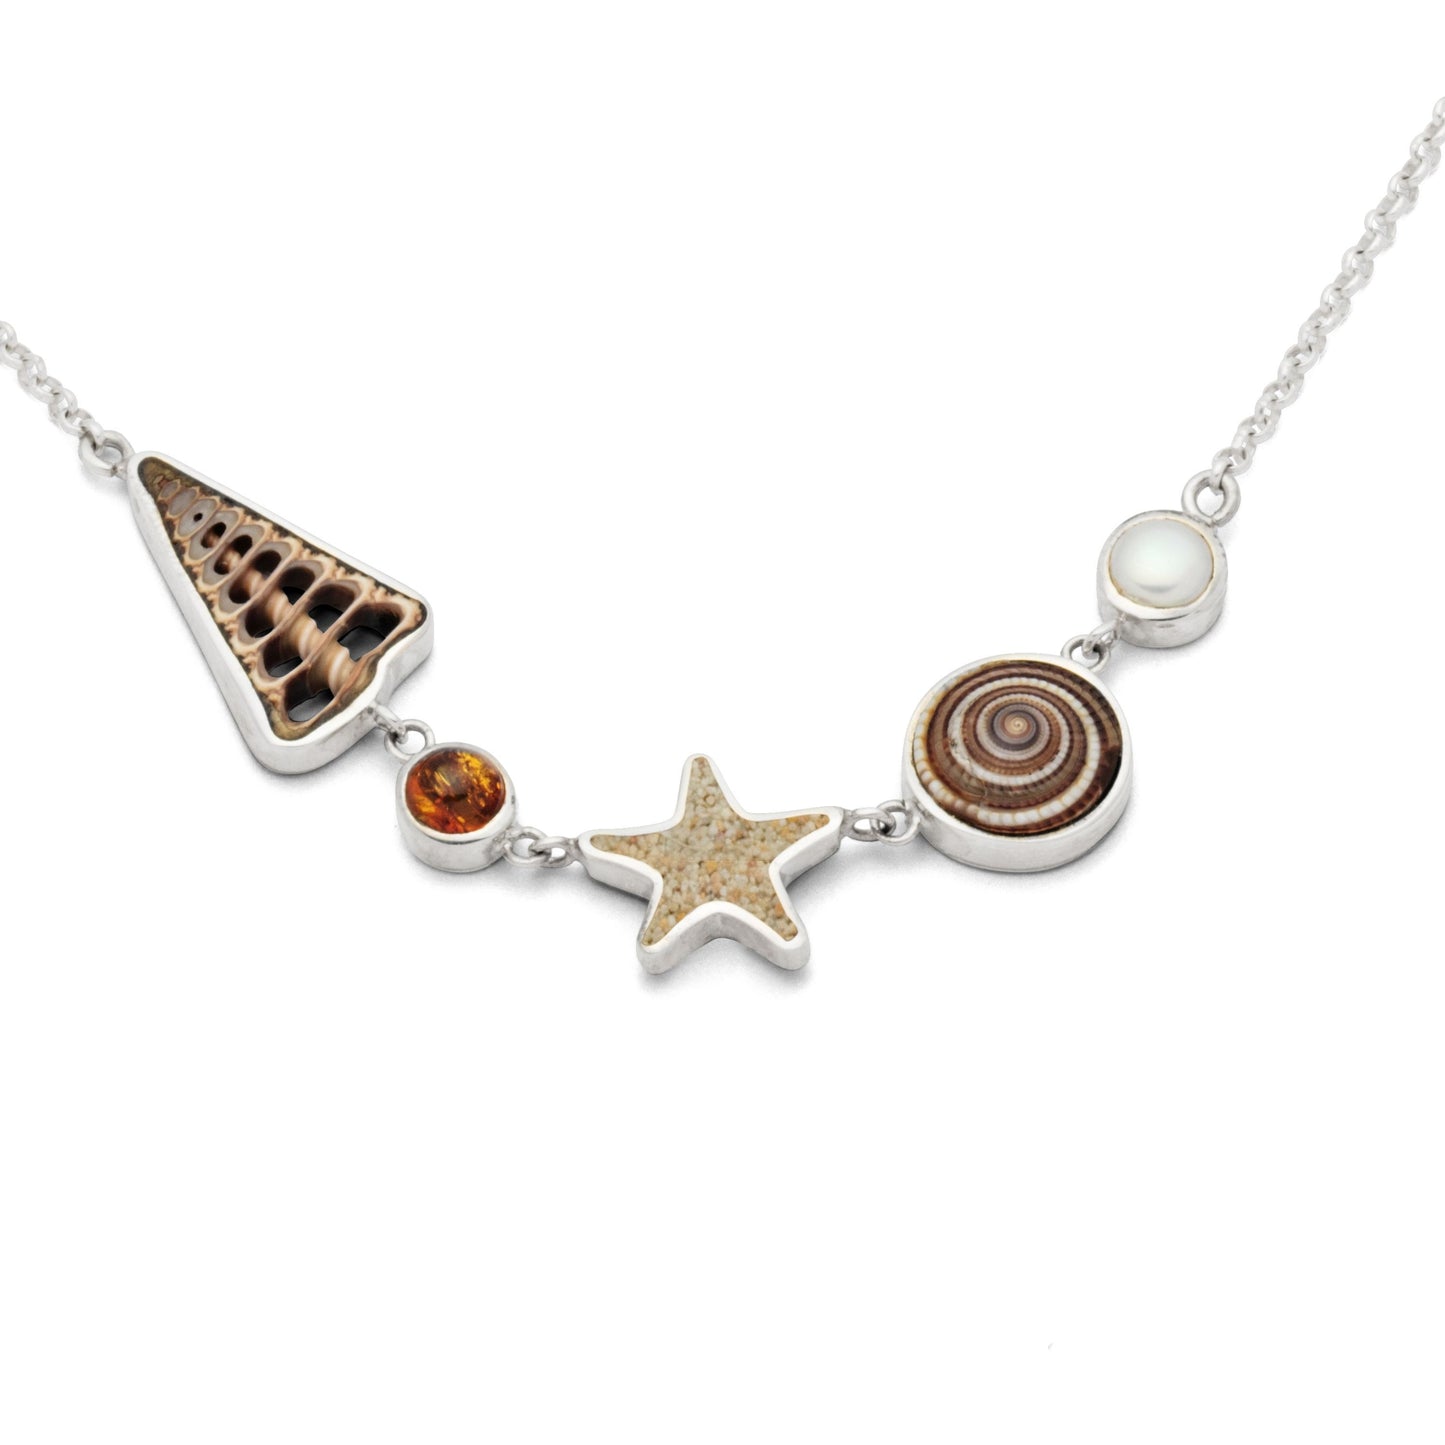 Necklace “Strandrausch 2.0”